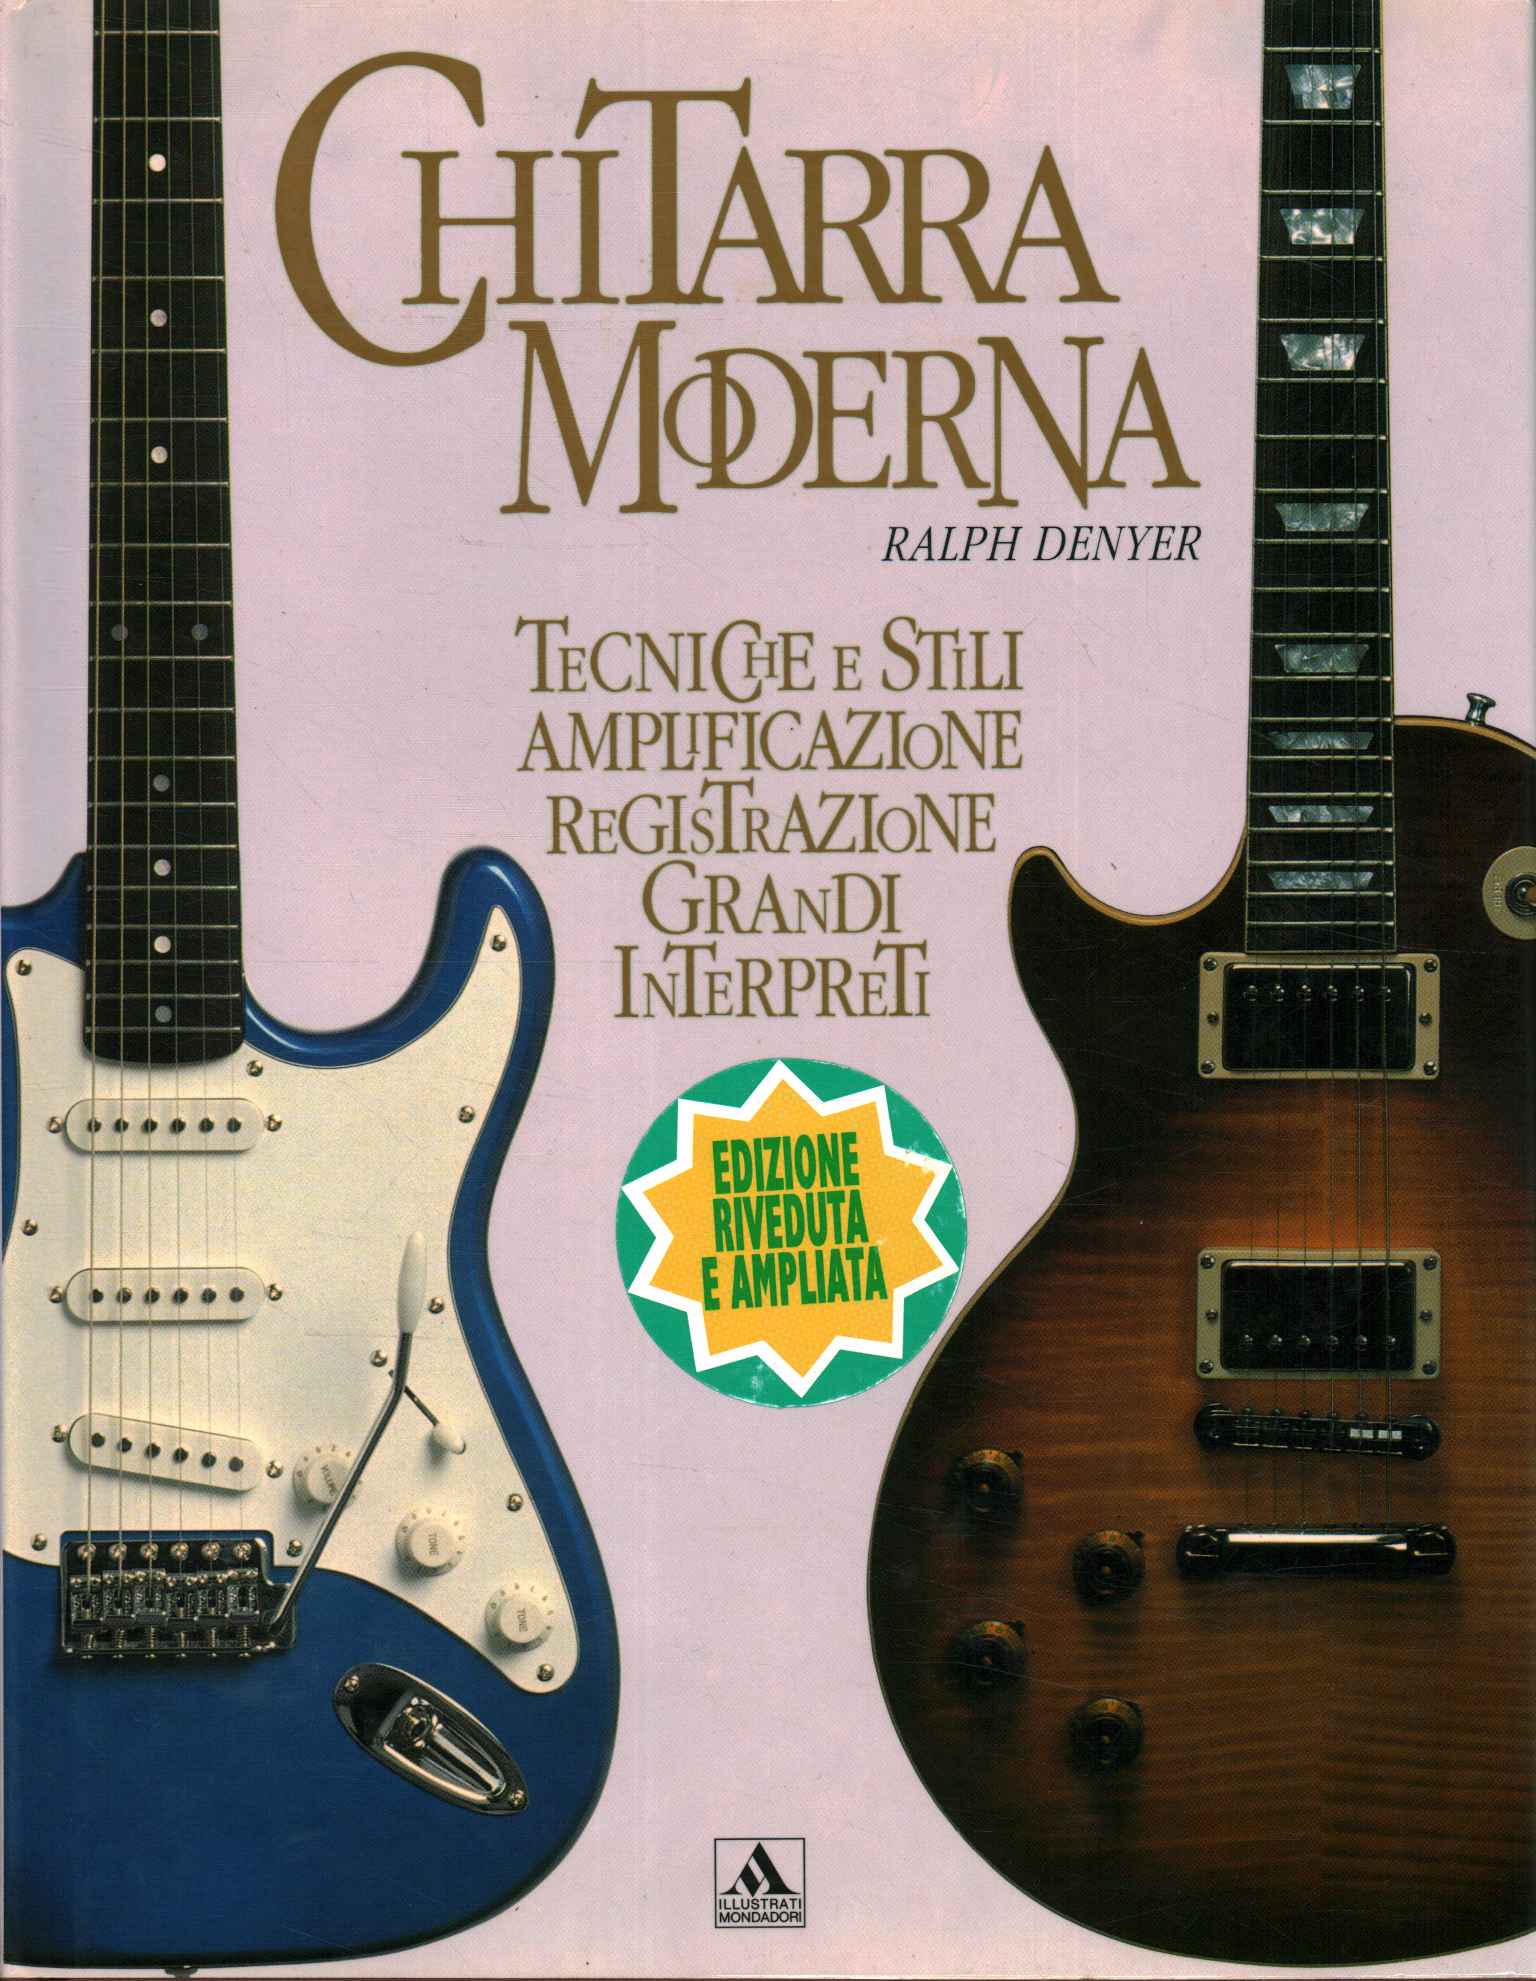 Books - Manuals - Various, Modern guitar